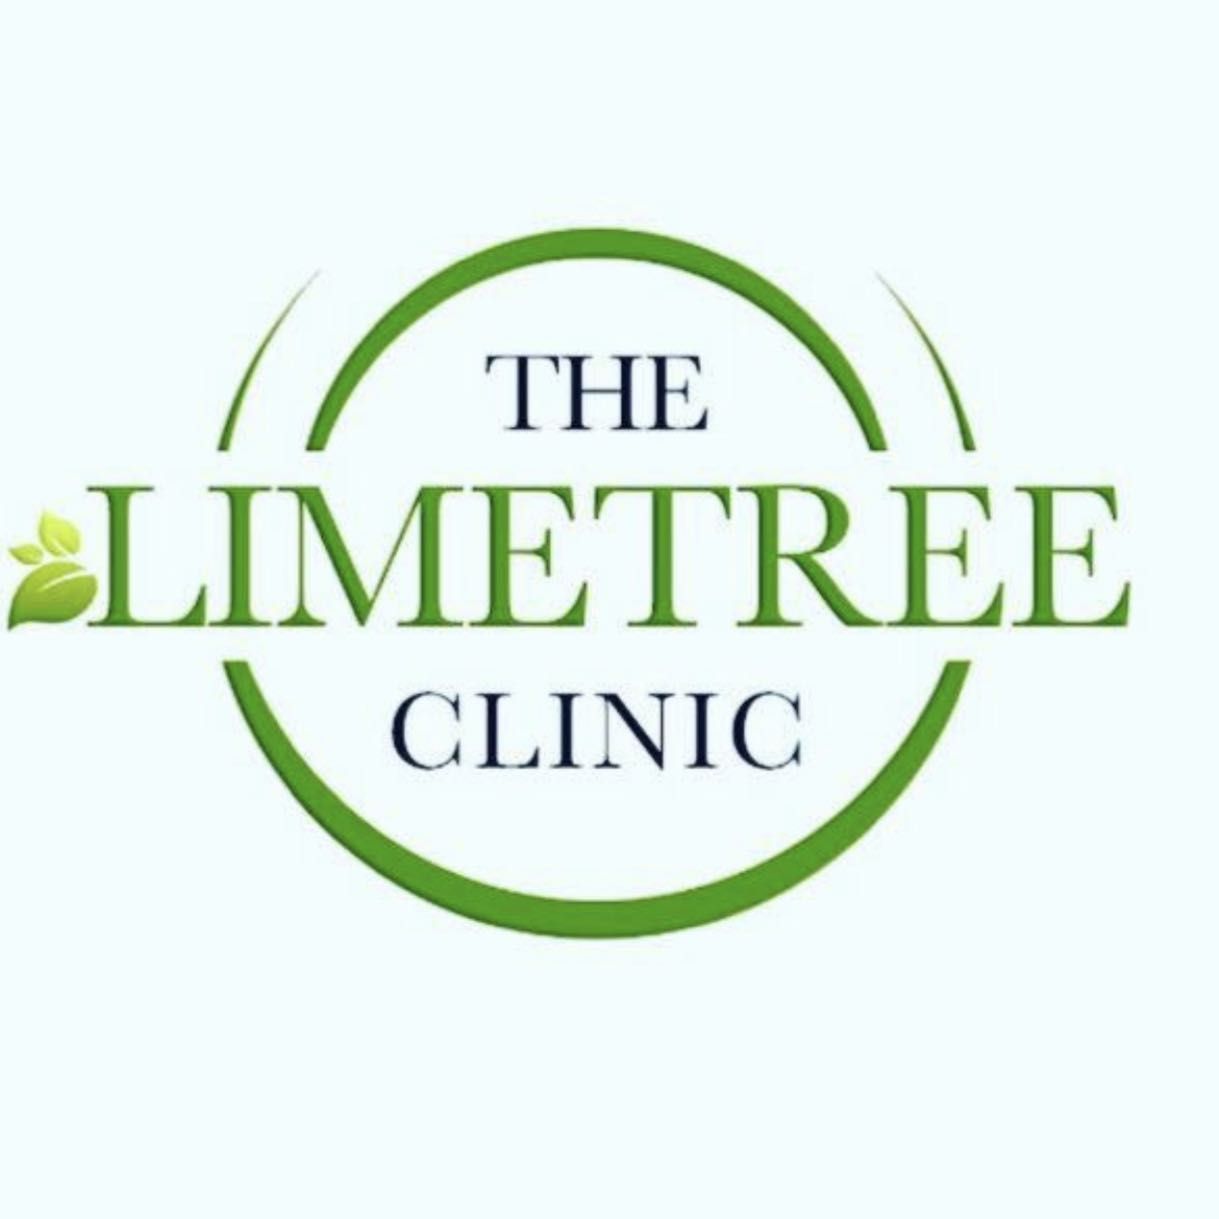 The limetree clinic, 375 Washwood Heath Road, B8 2XE, Birmingham